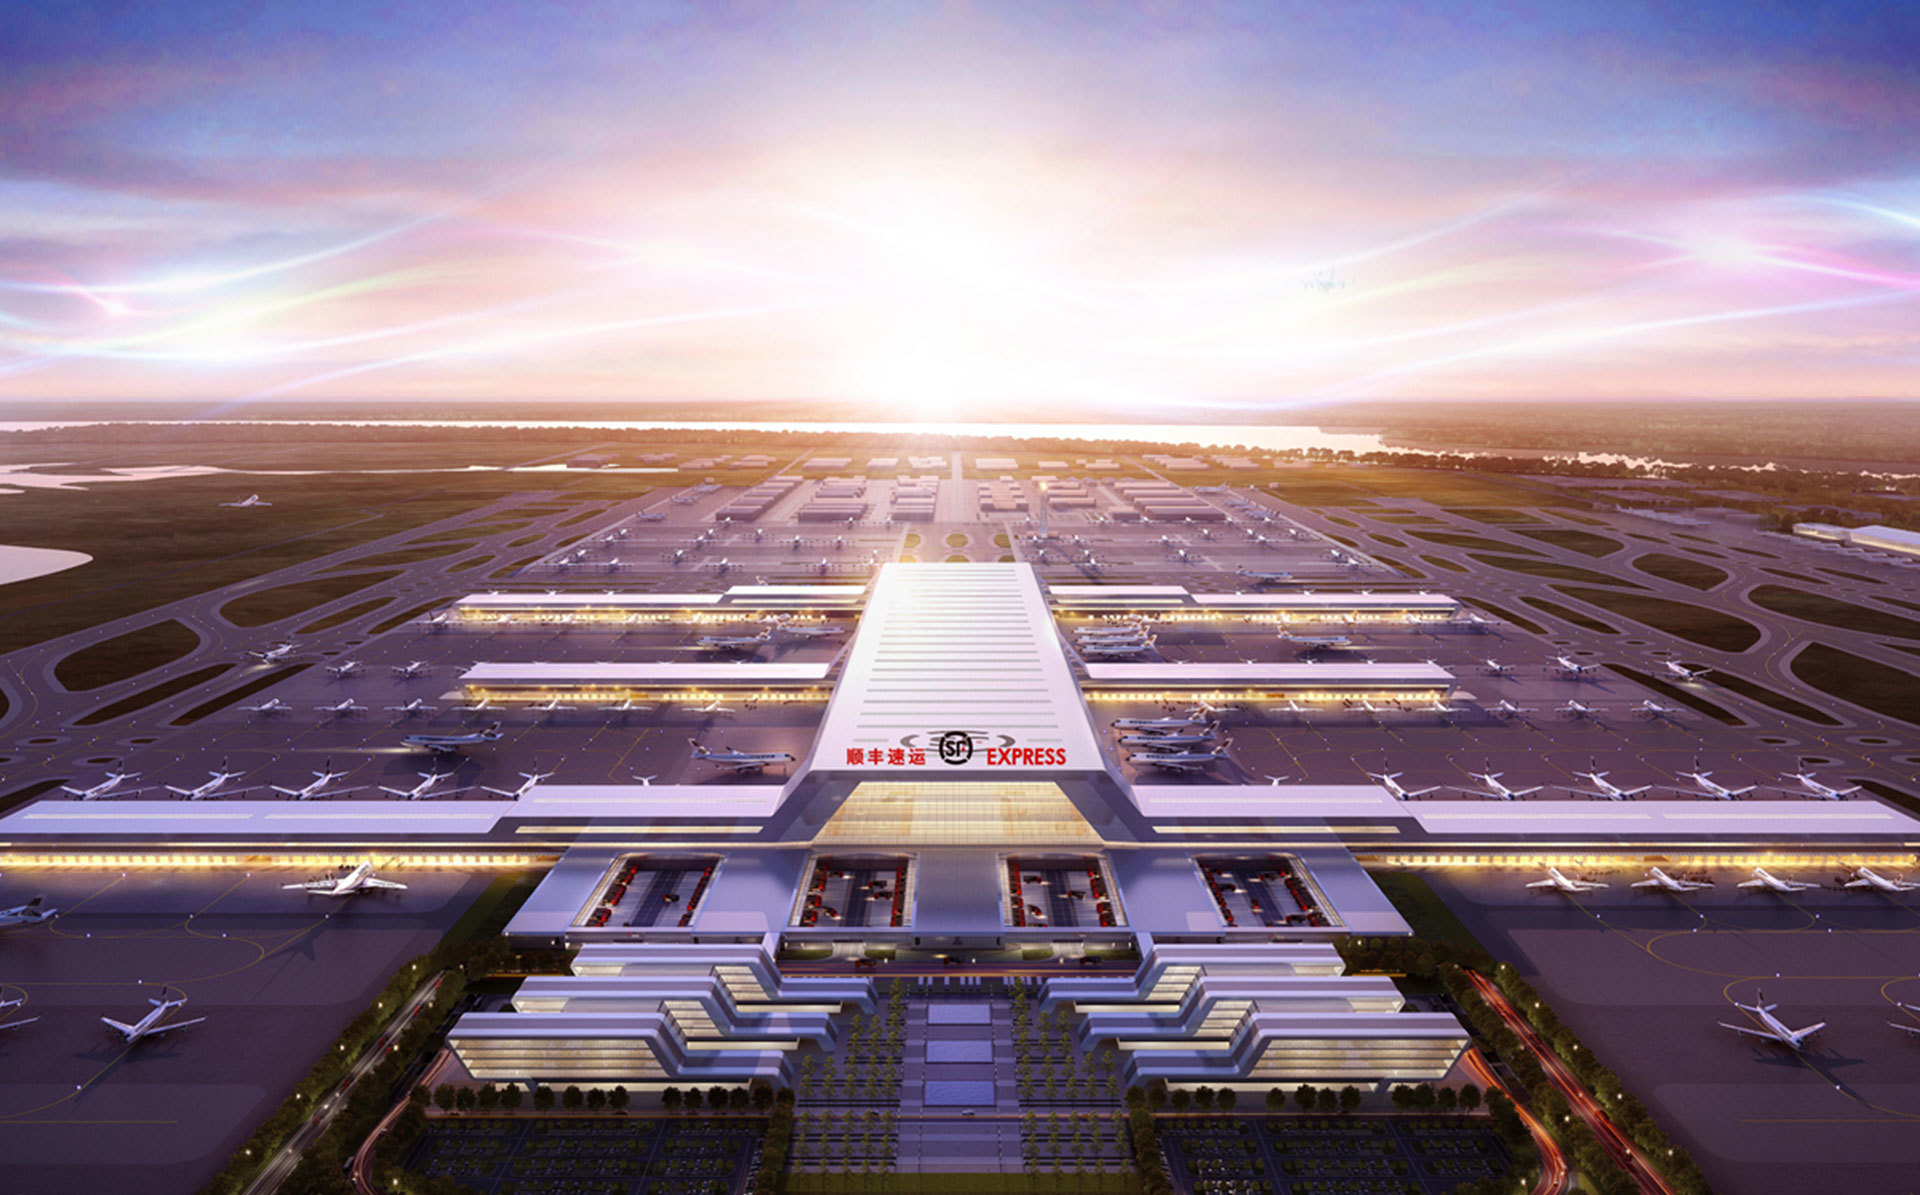 A civil airport for SF Express in Ezhou, Hubei